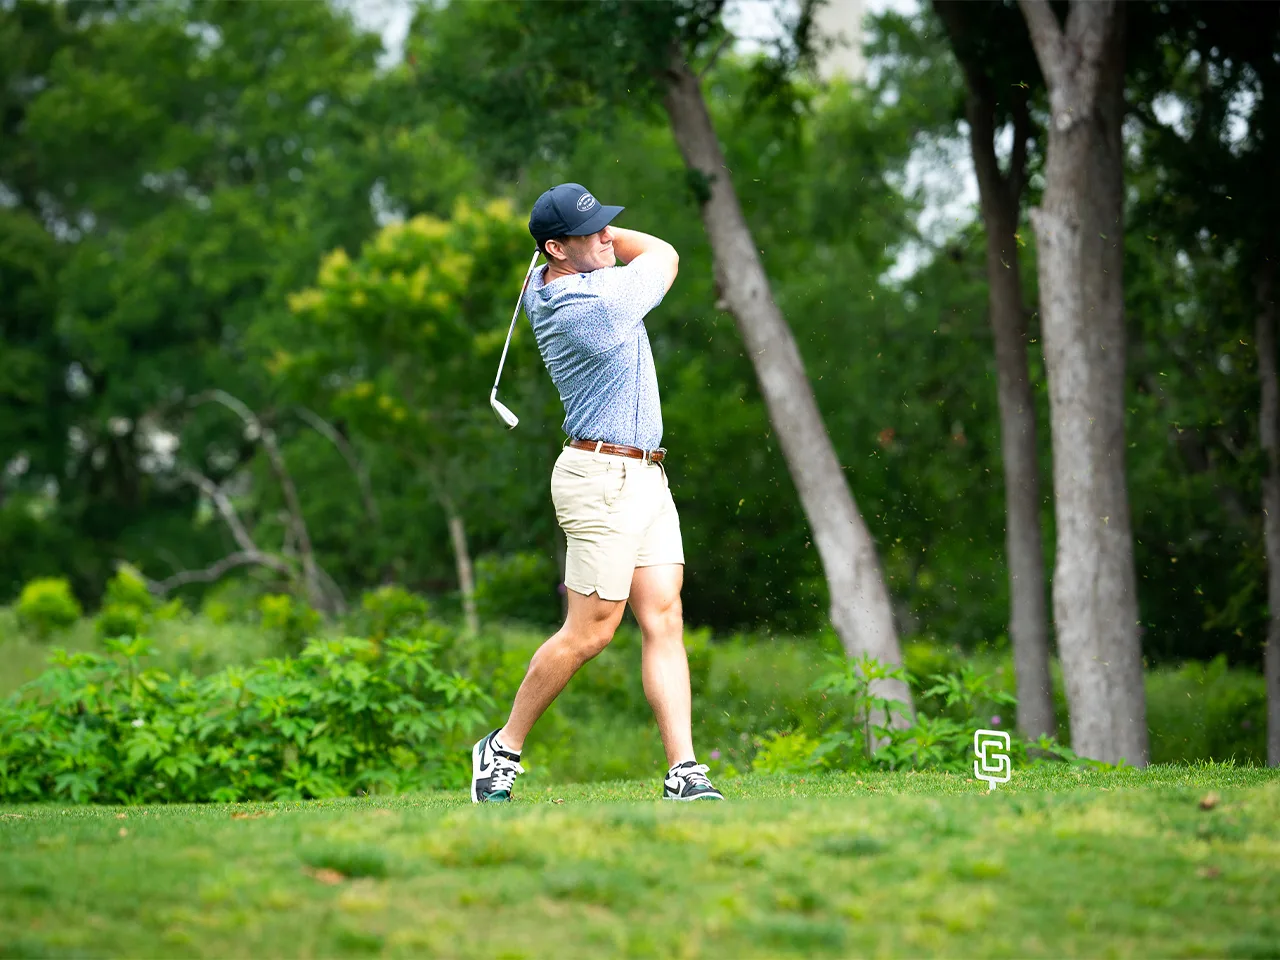 A man swings a golf club in a beautiful green golf course.